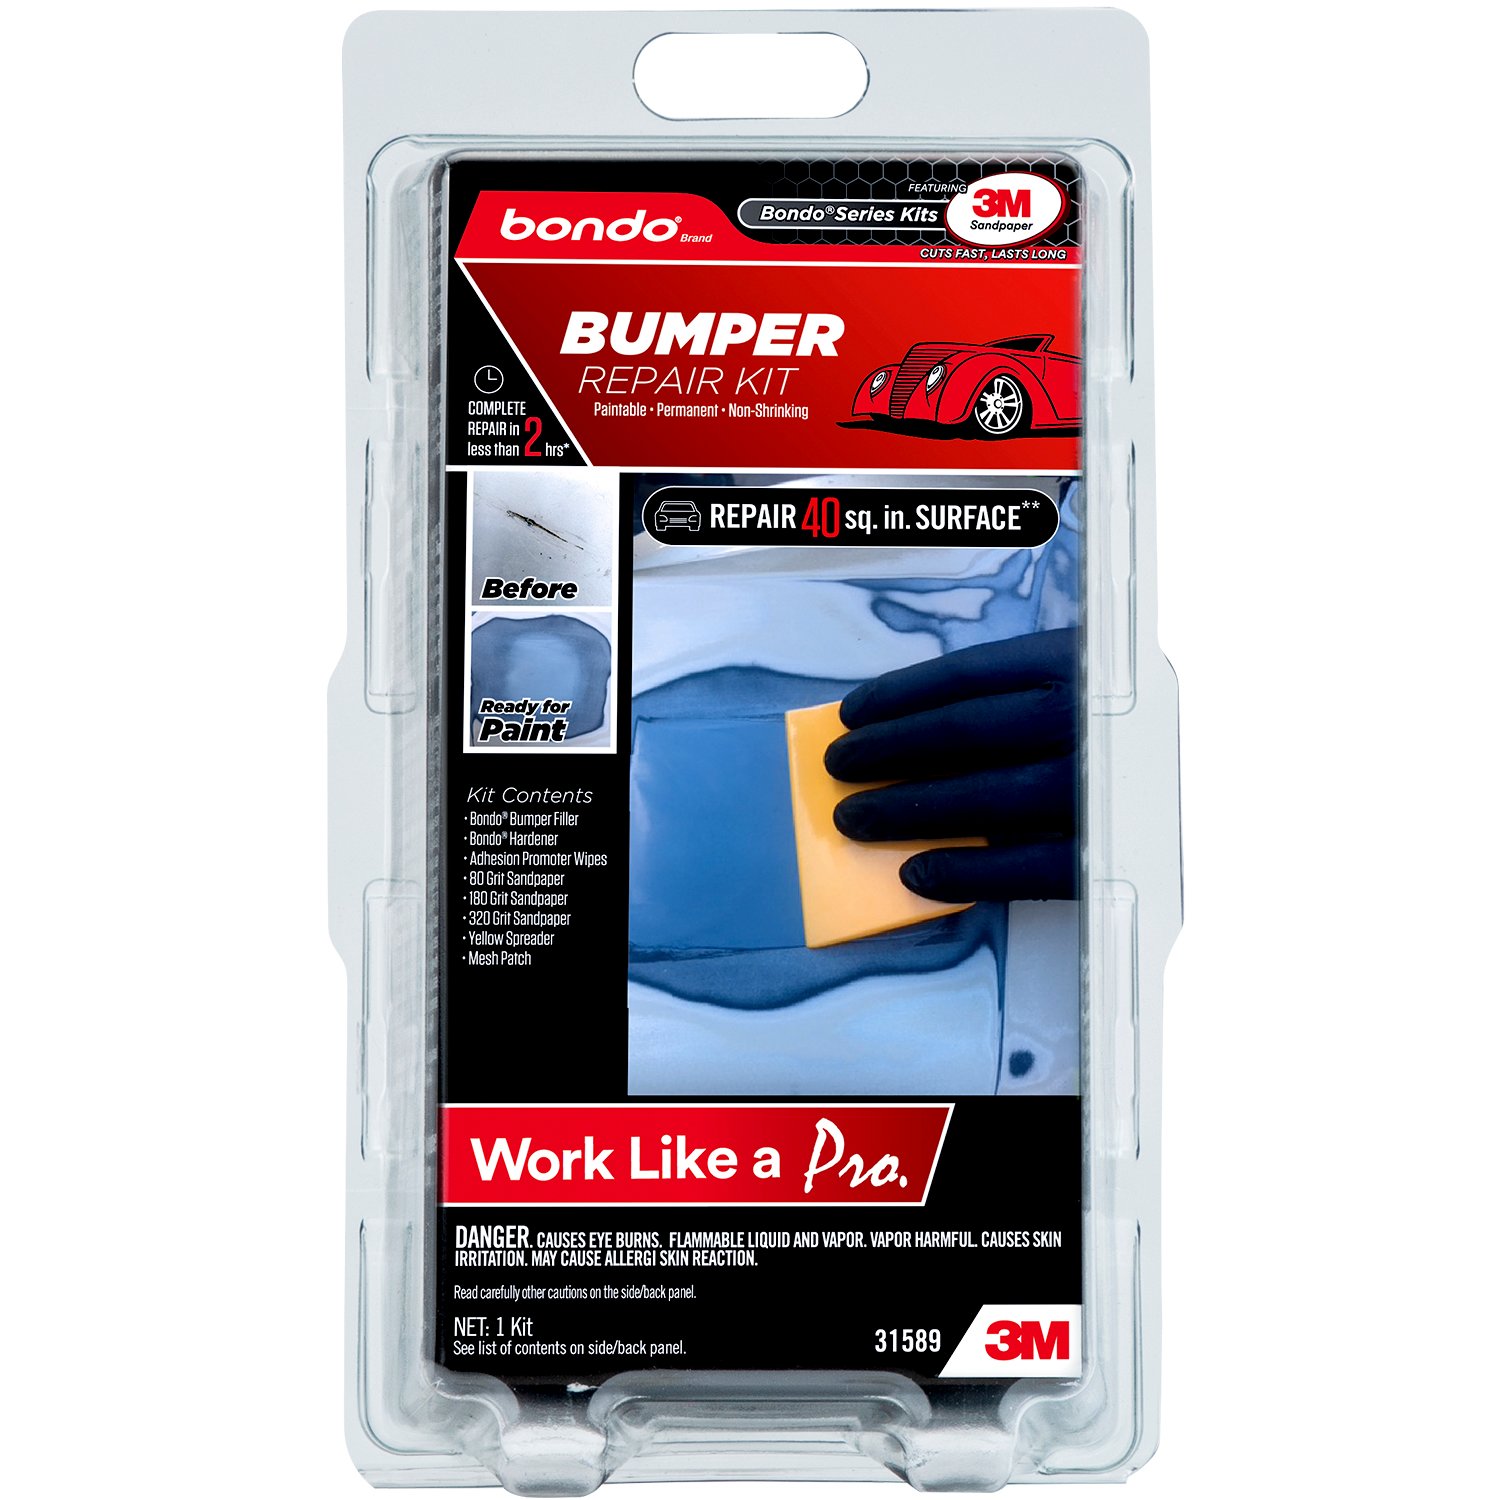 7100190982 - Bondo Bumper Repair Kit Clamshell, 31589, 6 kits per case